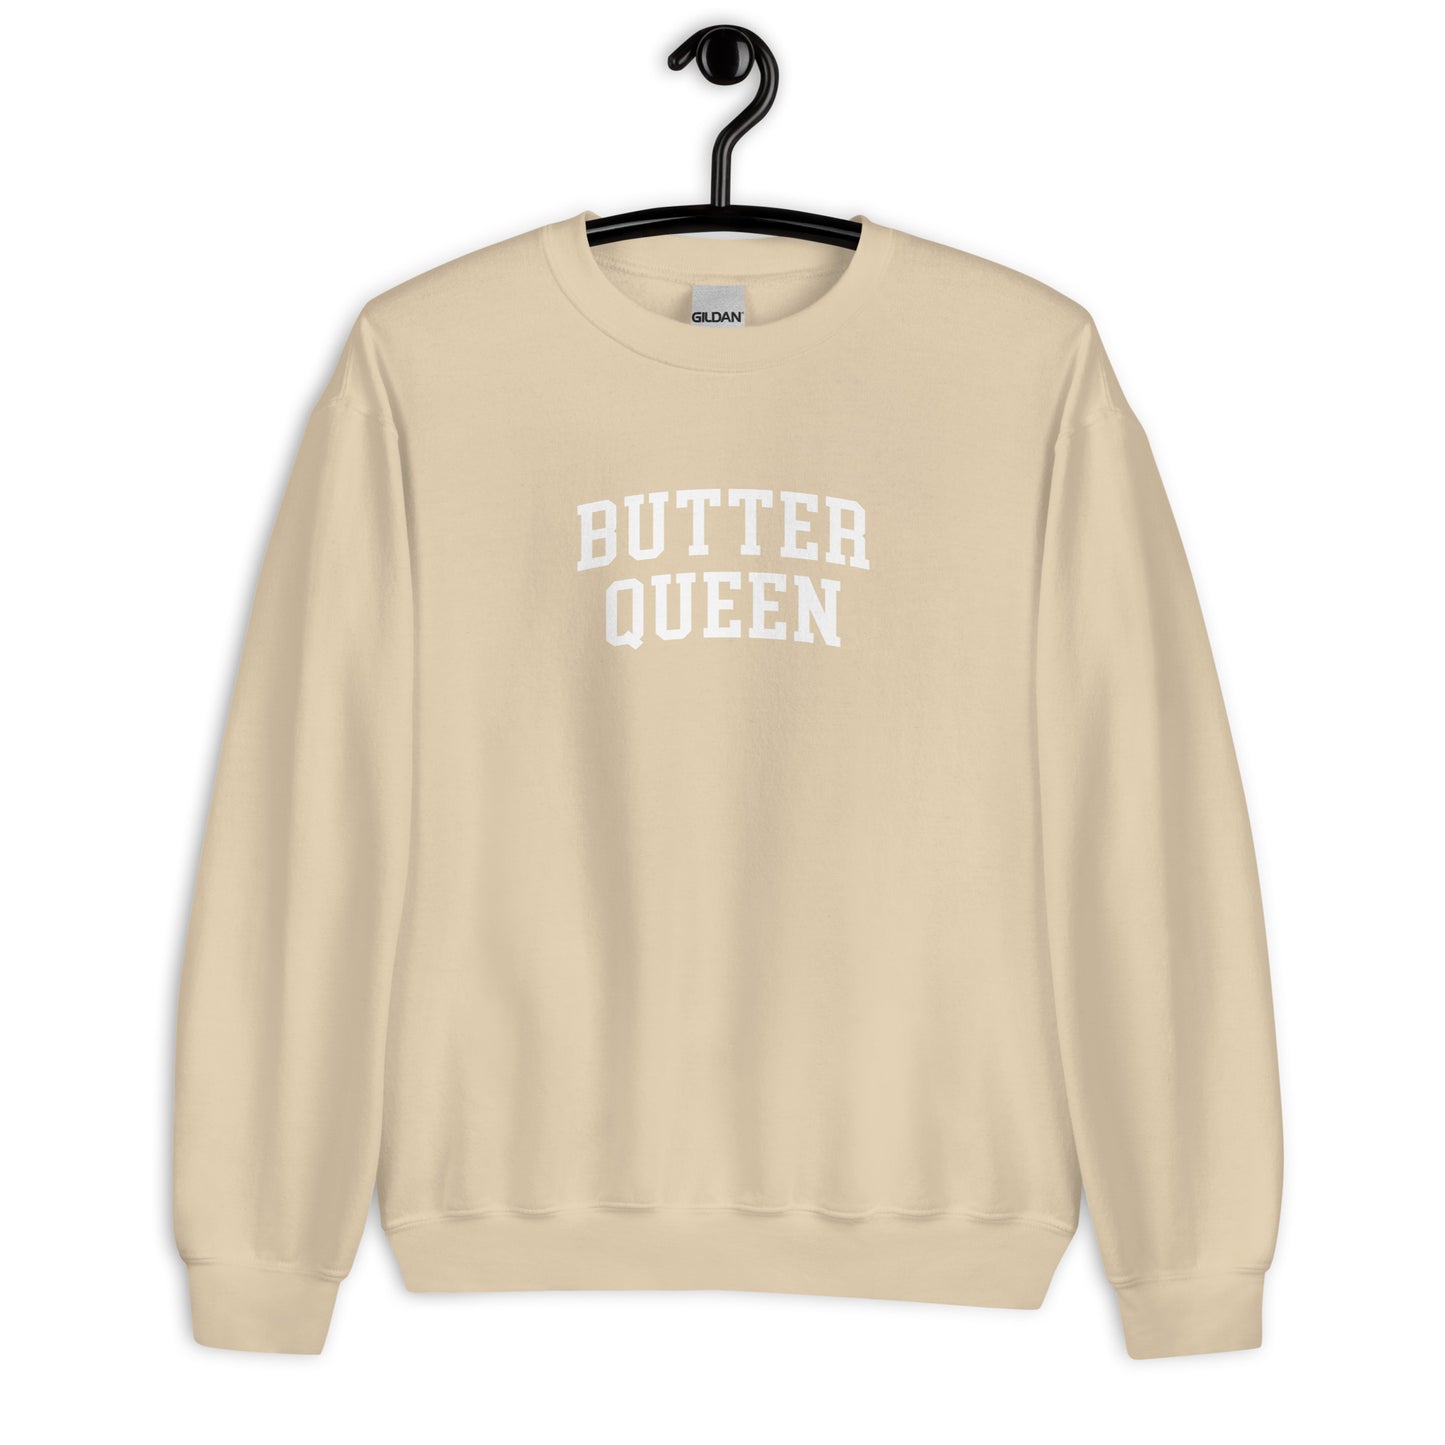 Butter Queen Sweatshirt - Arched Font